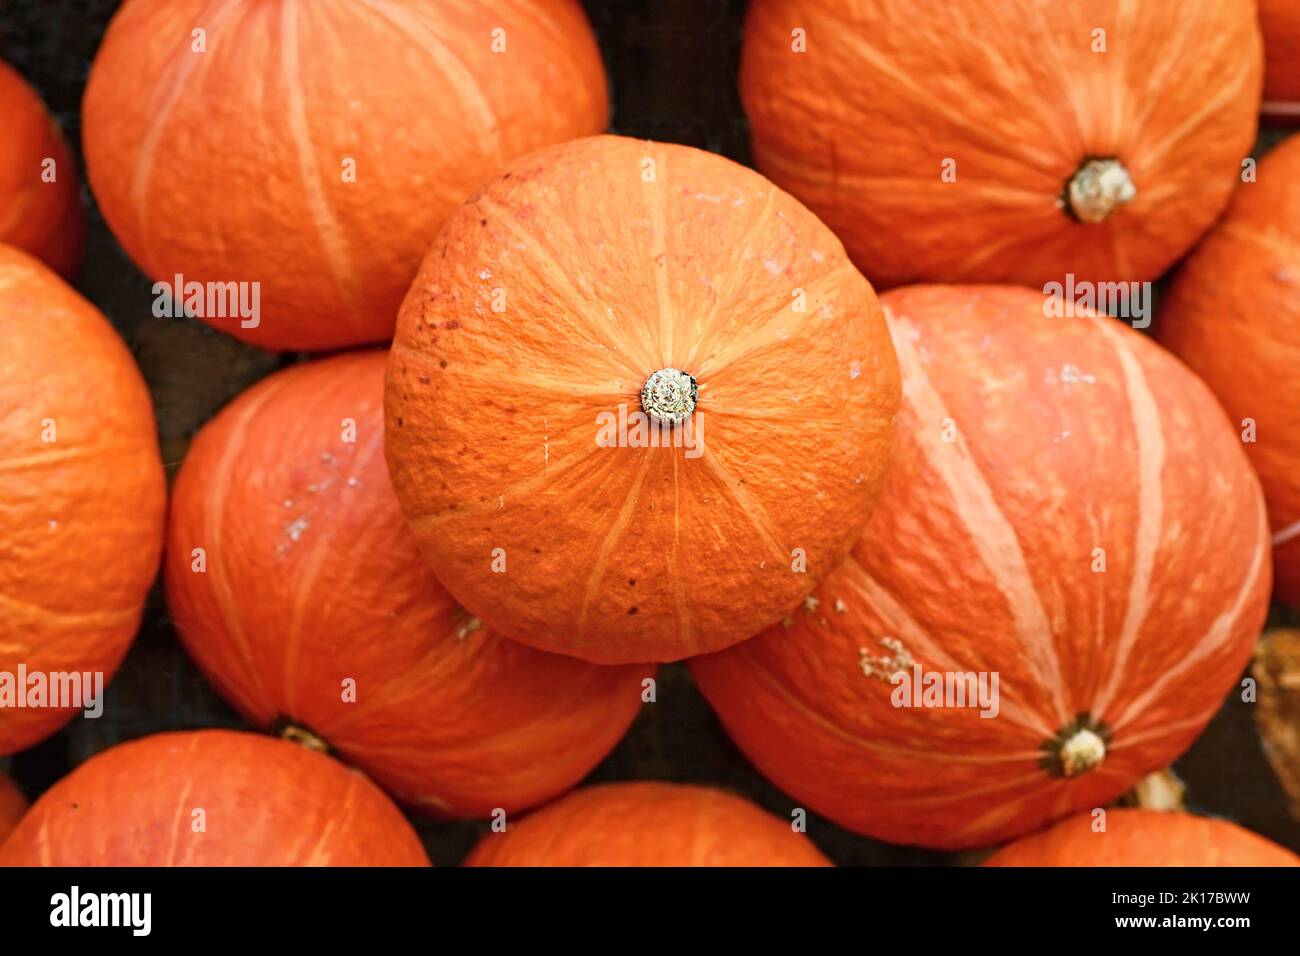 Red Kuri Hokkaido squash in pile of pumpkins Stock Photo